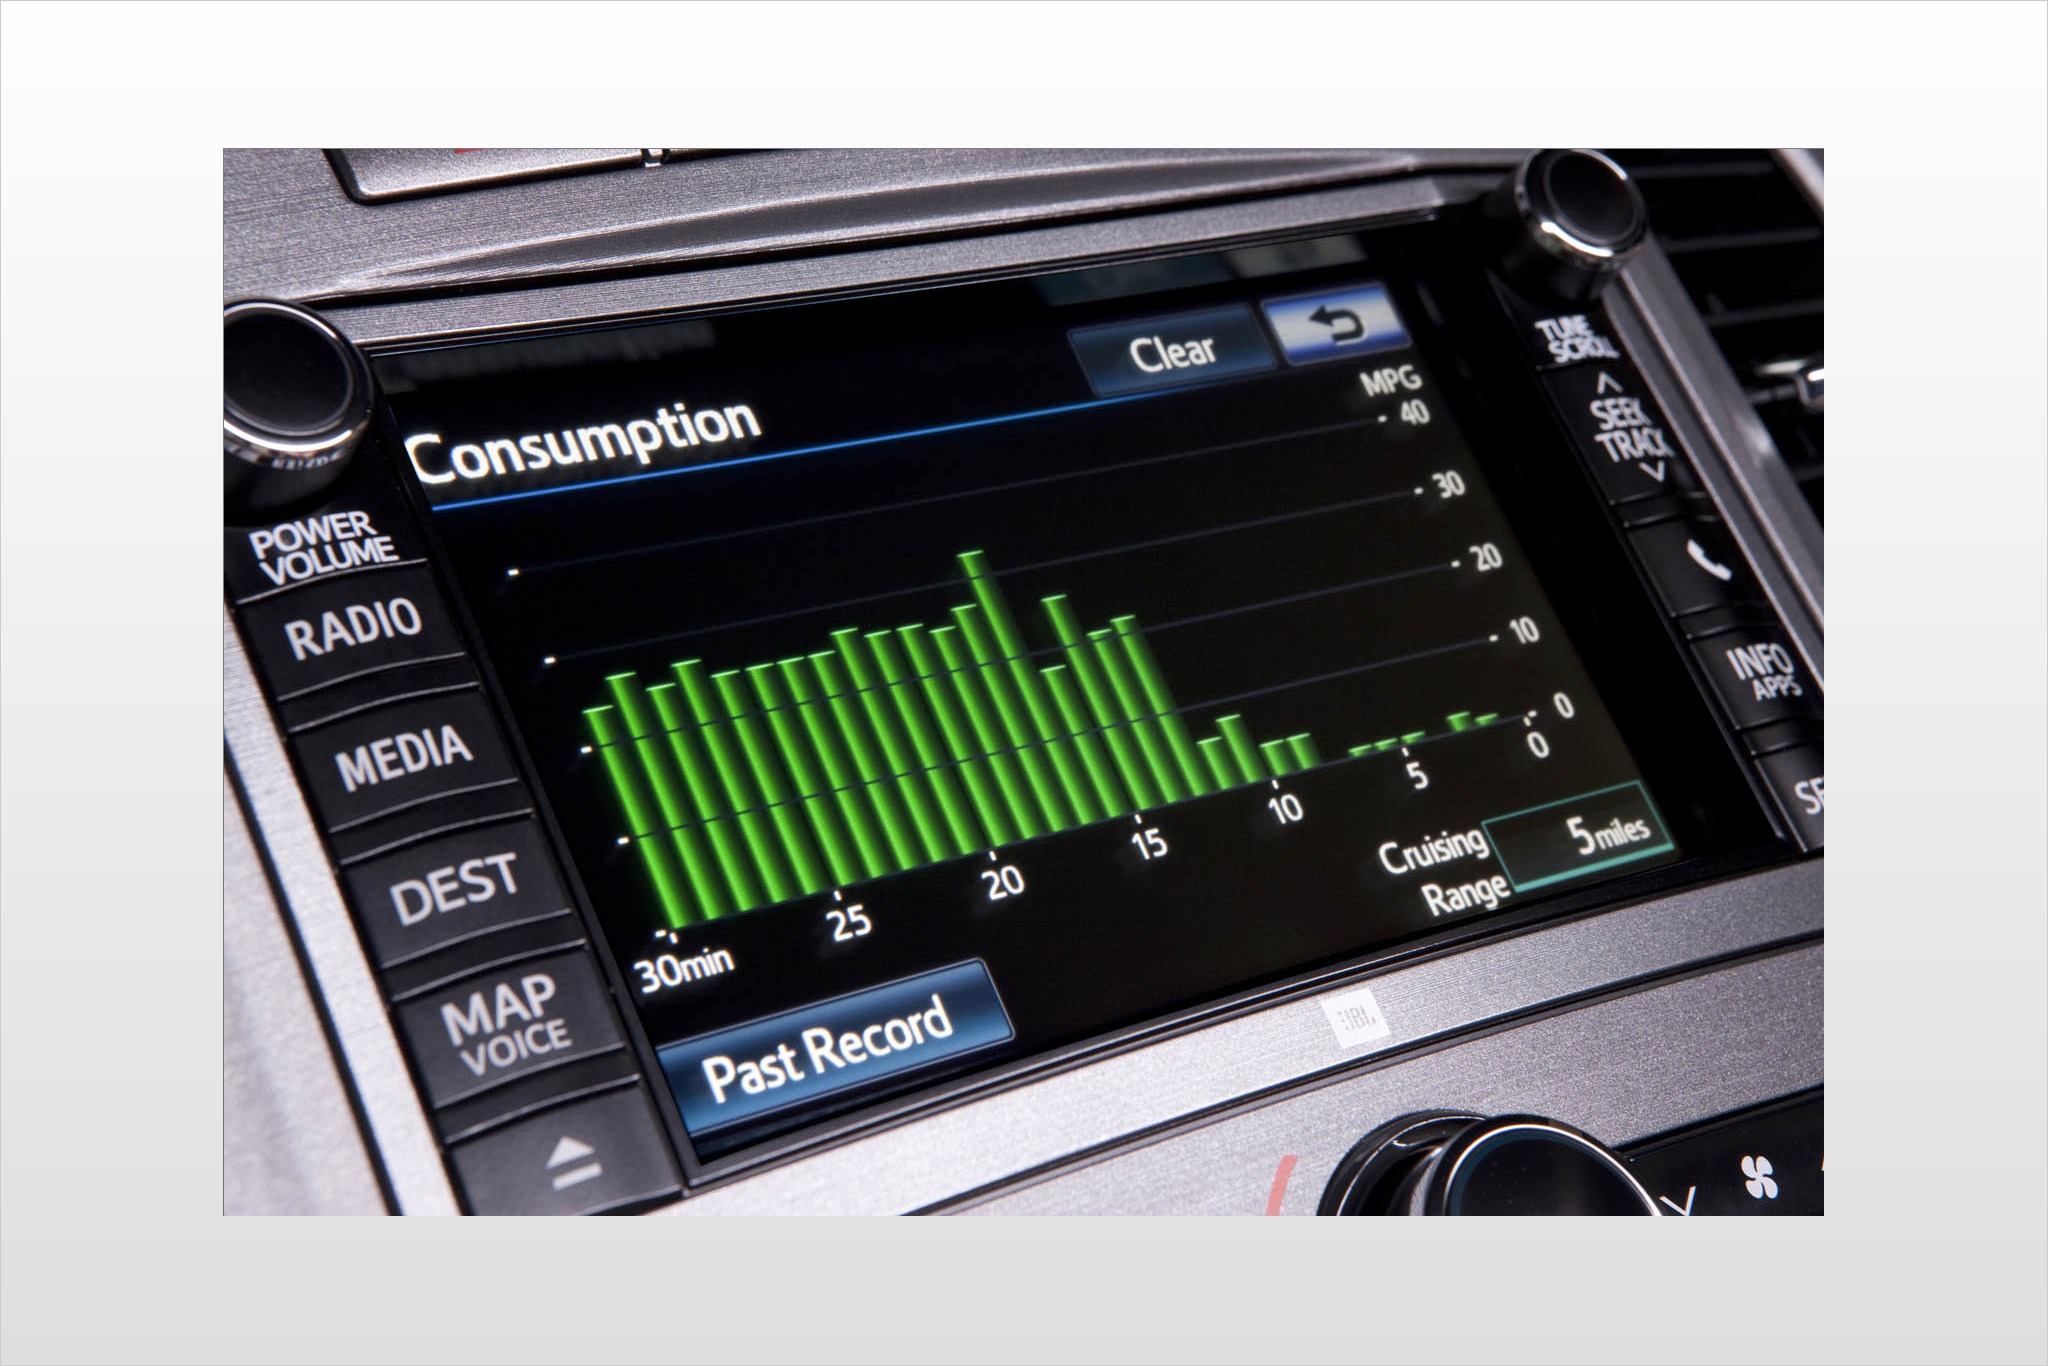 2013 Toyota Venza Limited Wagon Navigation System